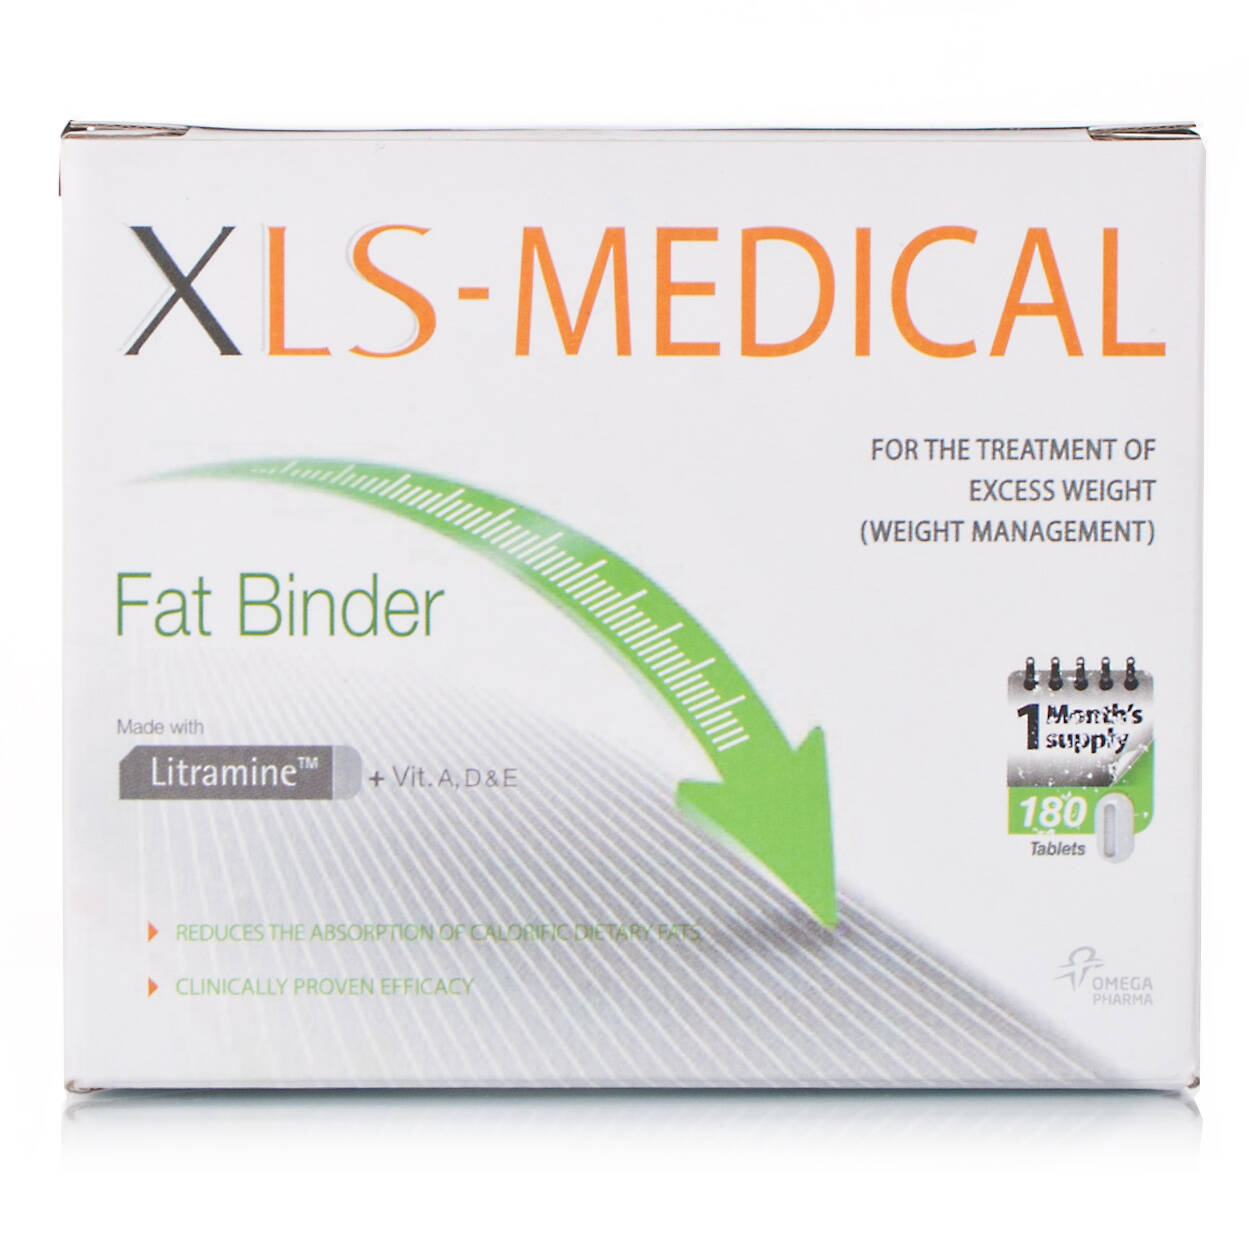 Xls-Medical Fat Binder - 180 tablets (1 month supply)